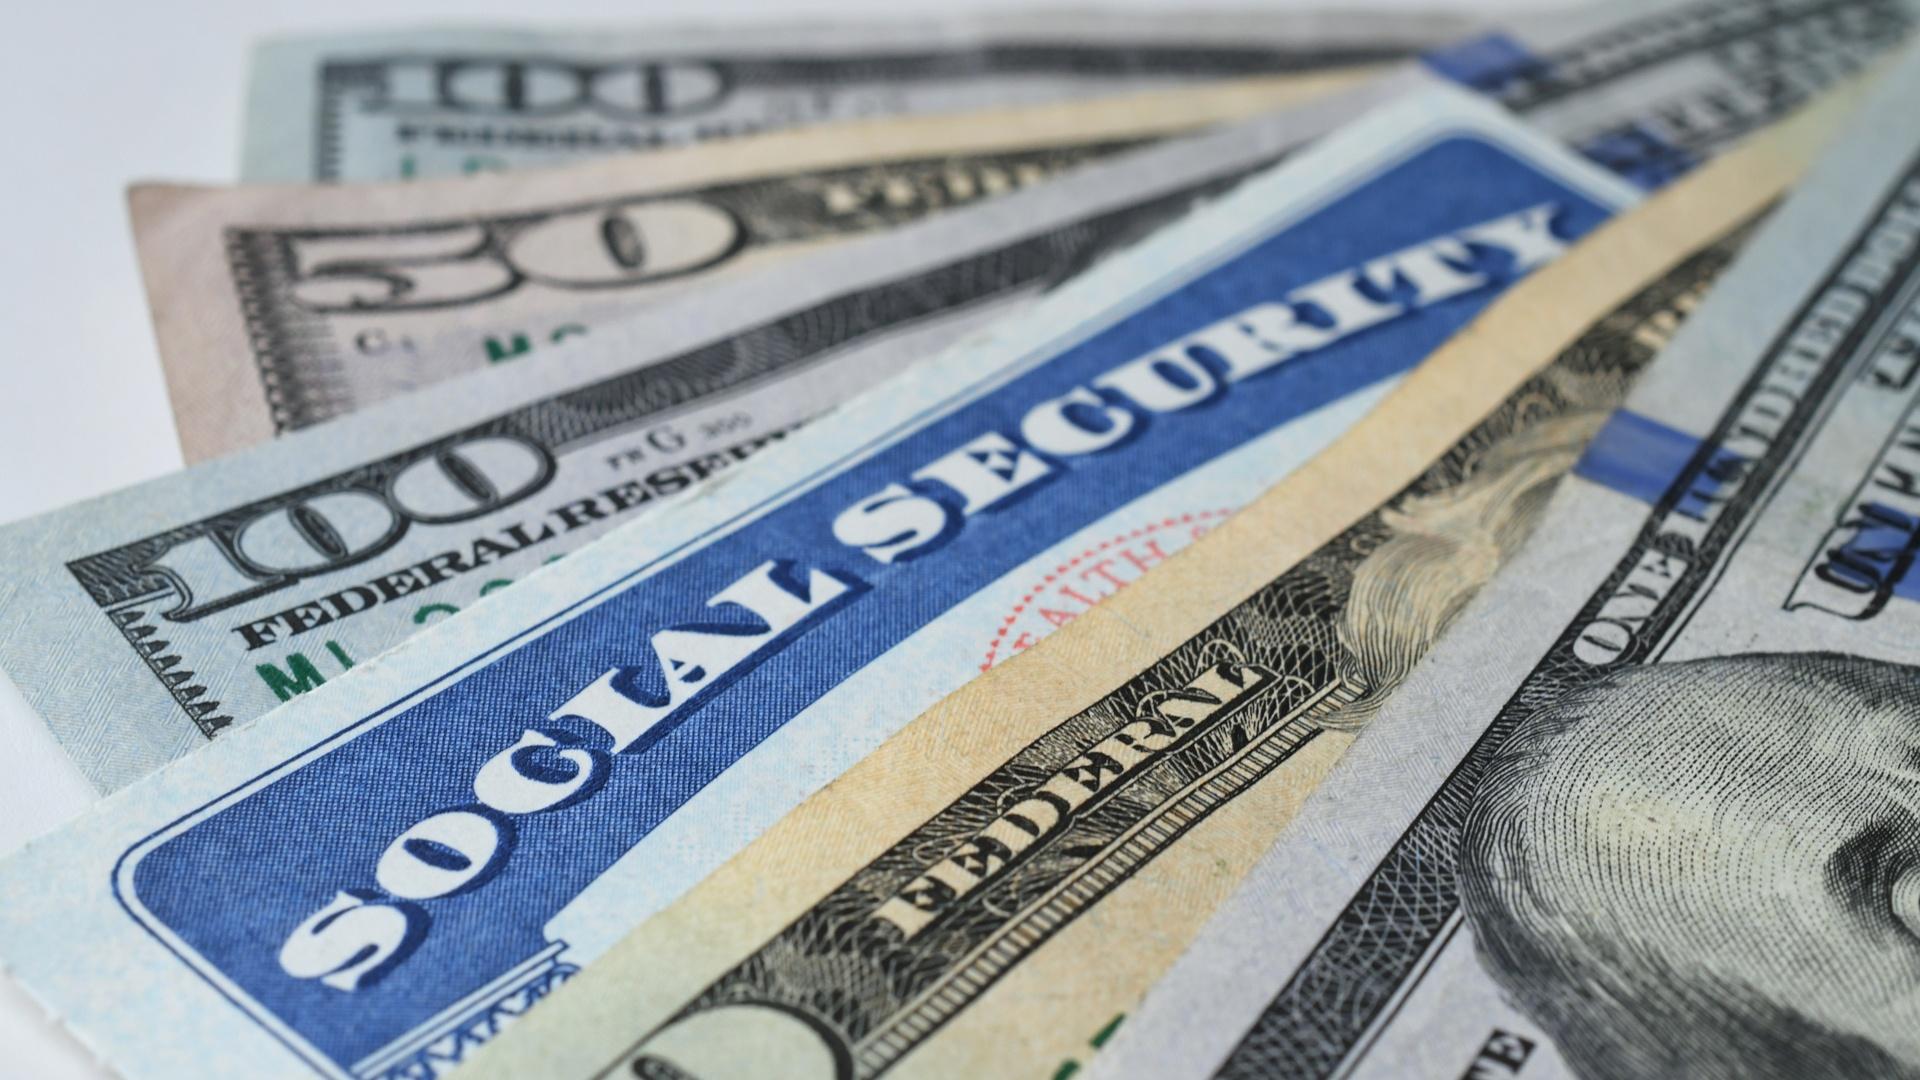 Social Security Payment